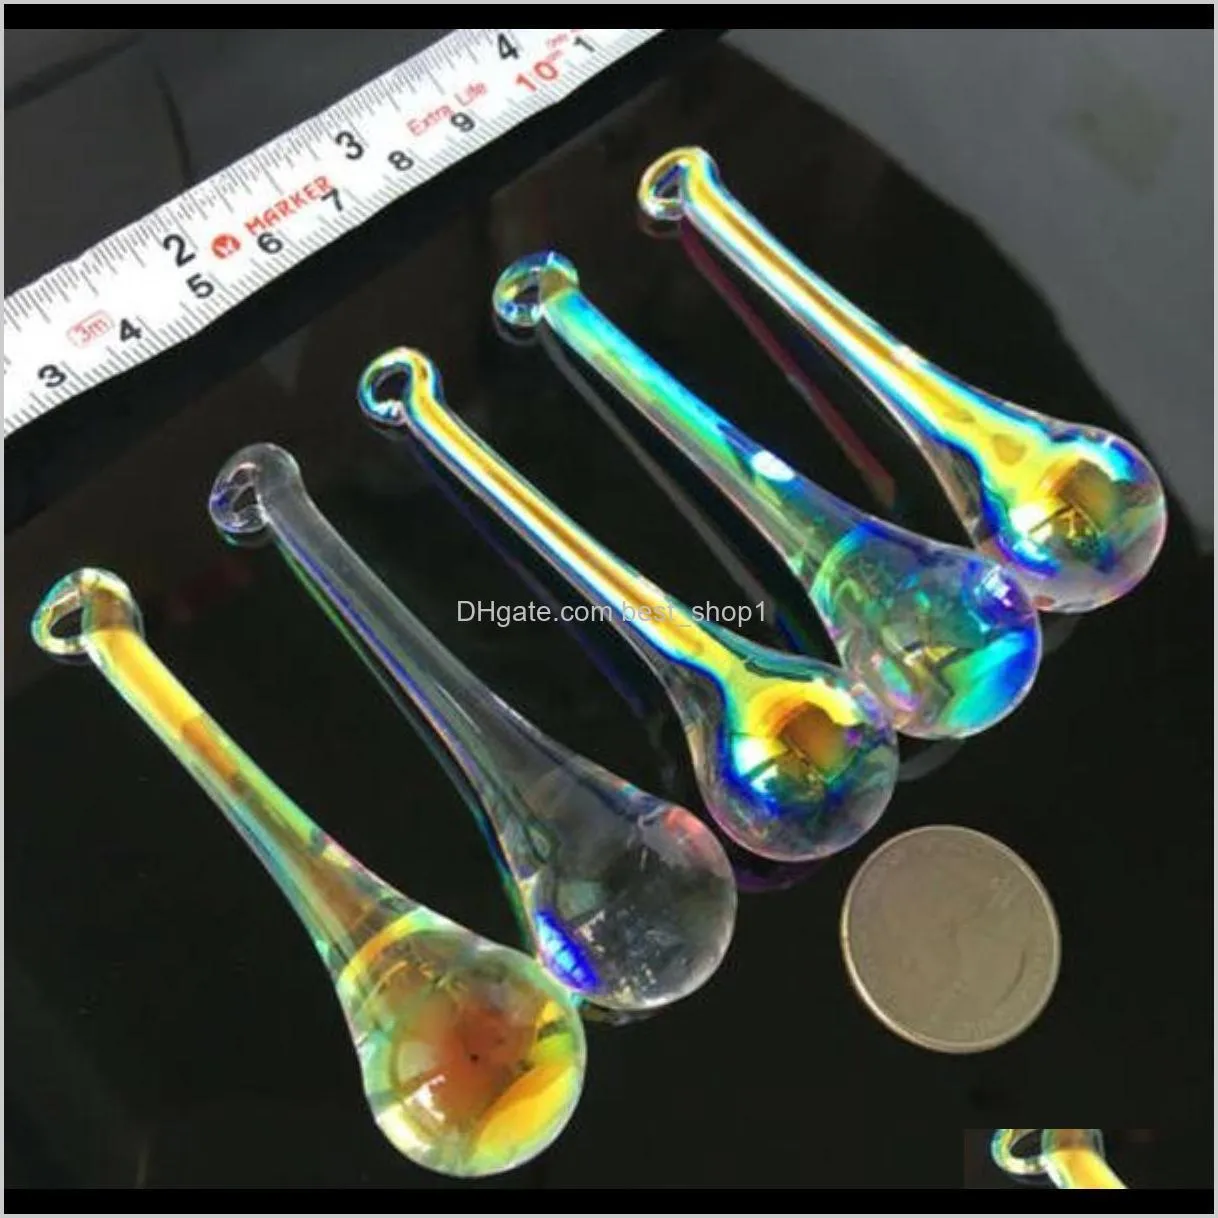 5x crystal raindrop chandelier glass prism drop icicle diy pendant suncatcher hanging waterdrop 80mm ornament h wmtqux